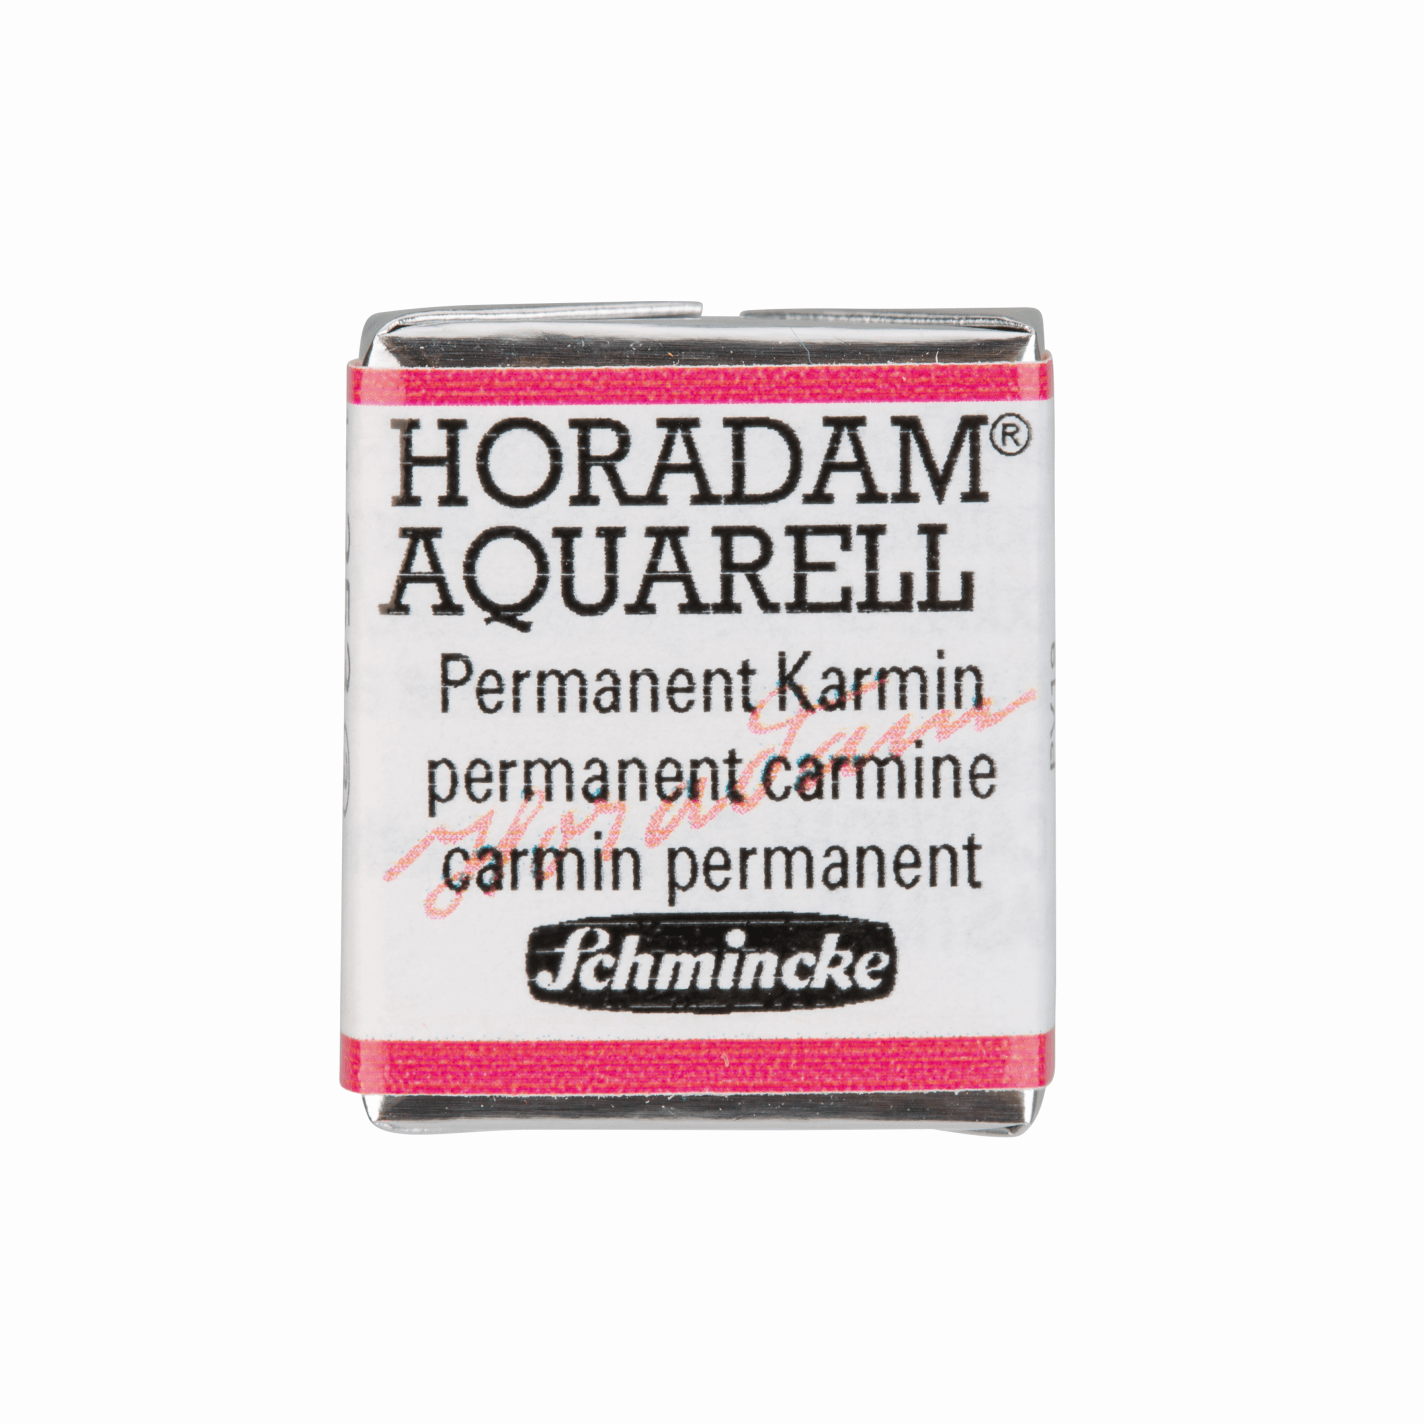 Schmincke Horadam Aquarell pans 1/2 pan Permanent Carmine